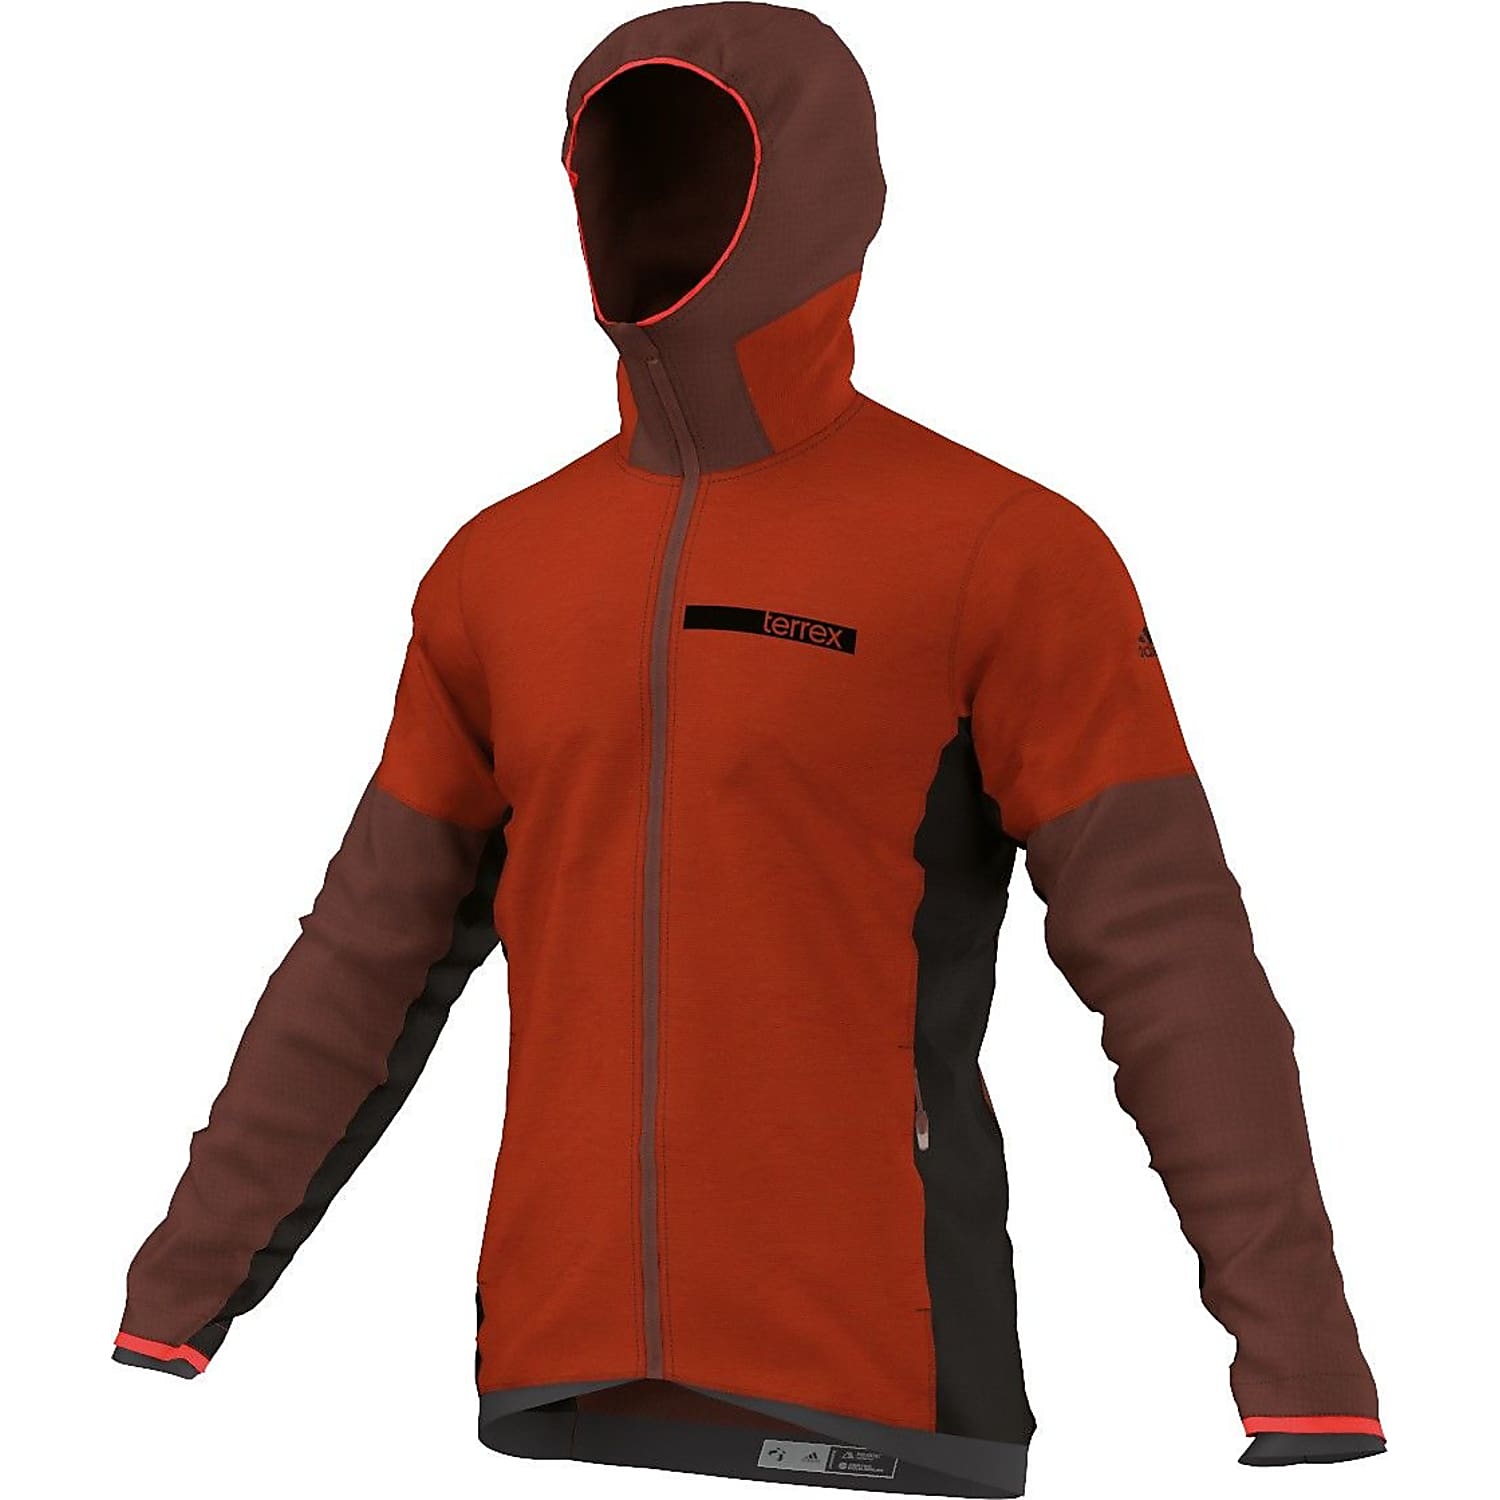 adidas golf climaheat polartec insulated jacket